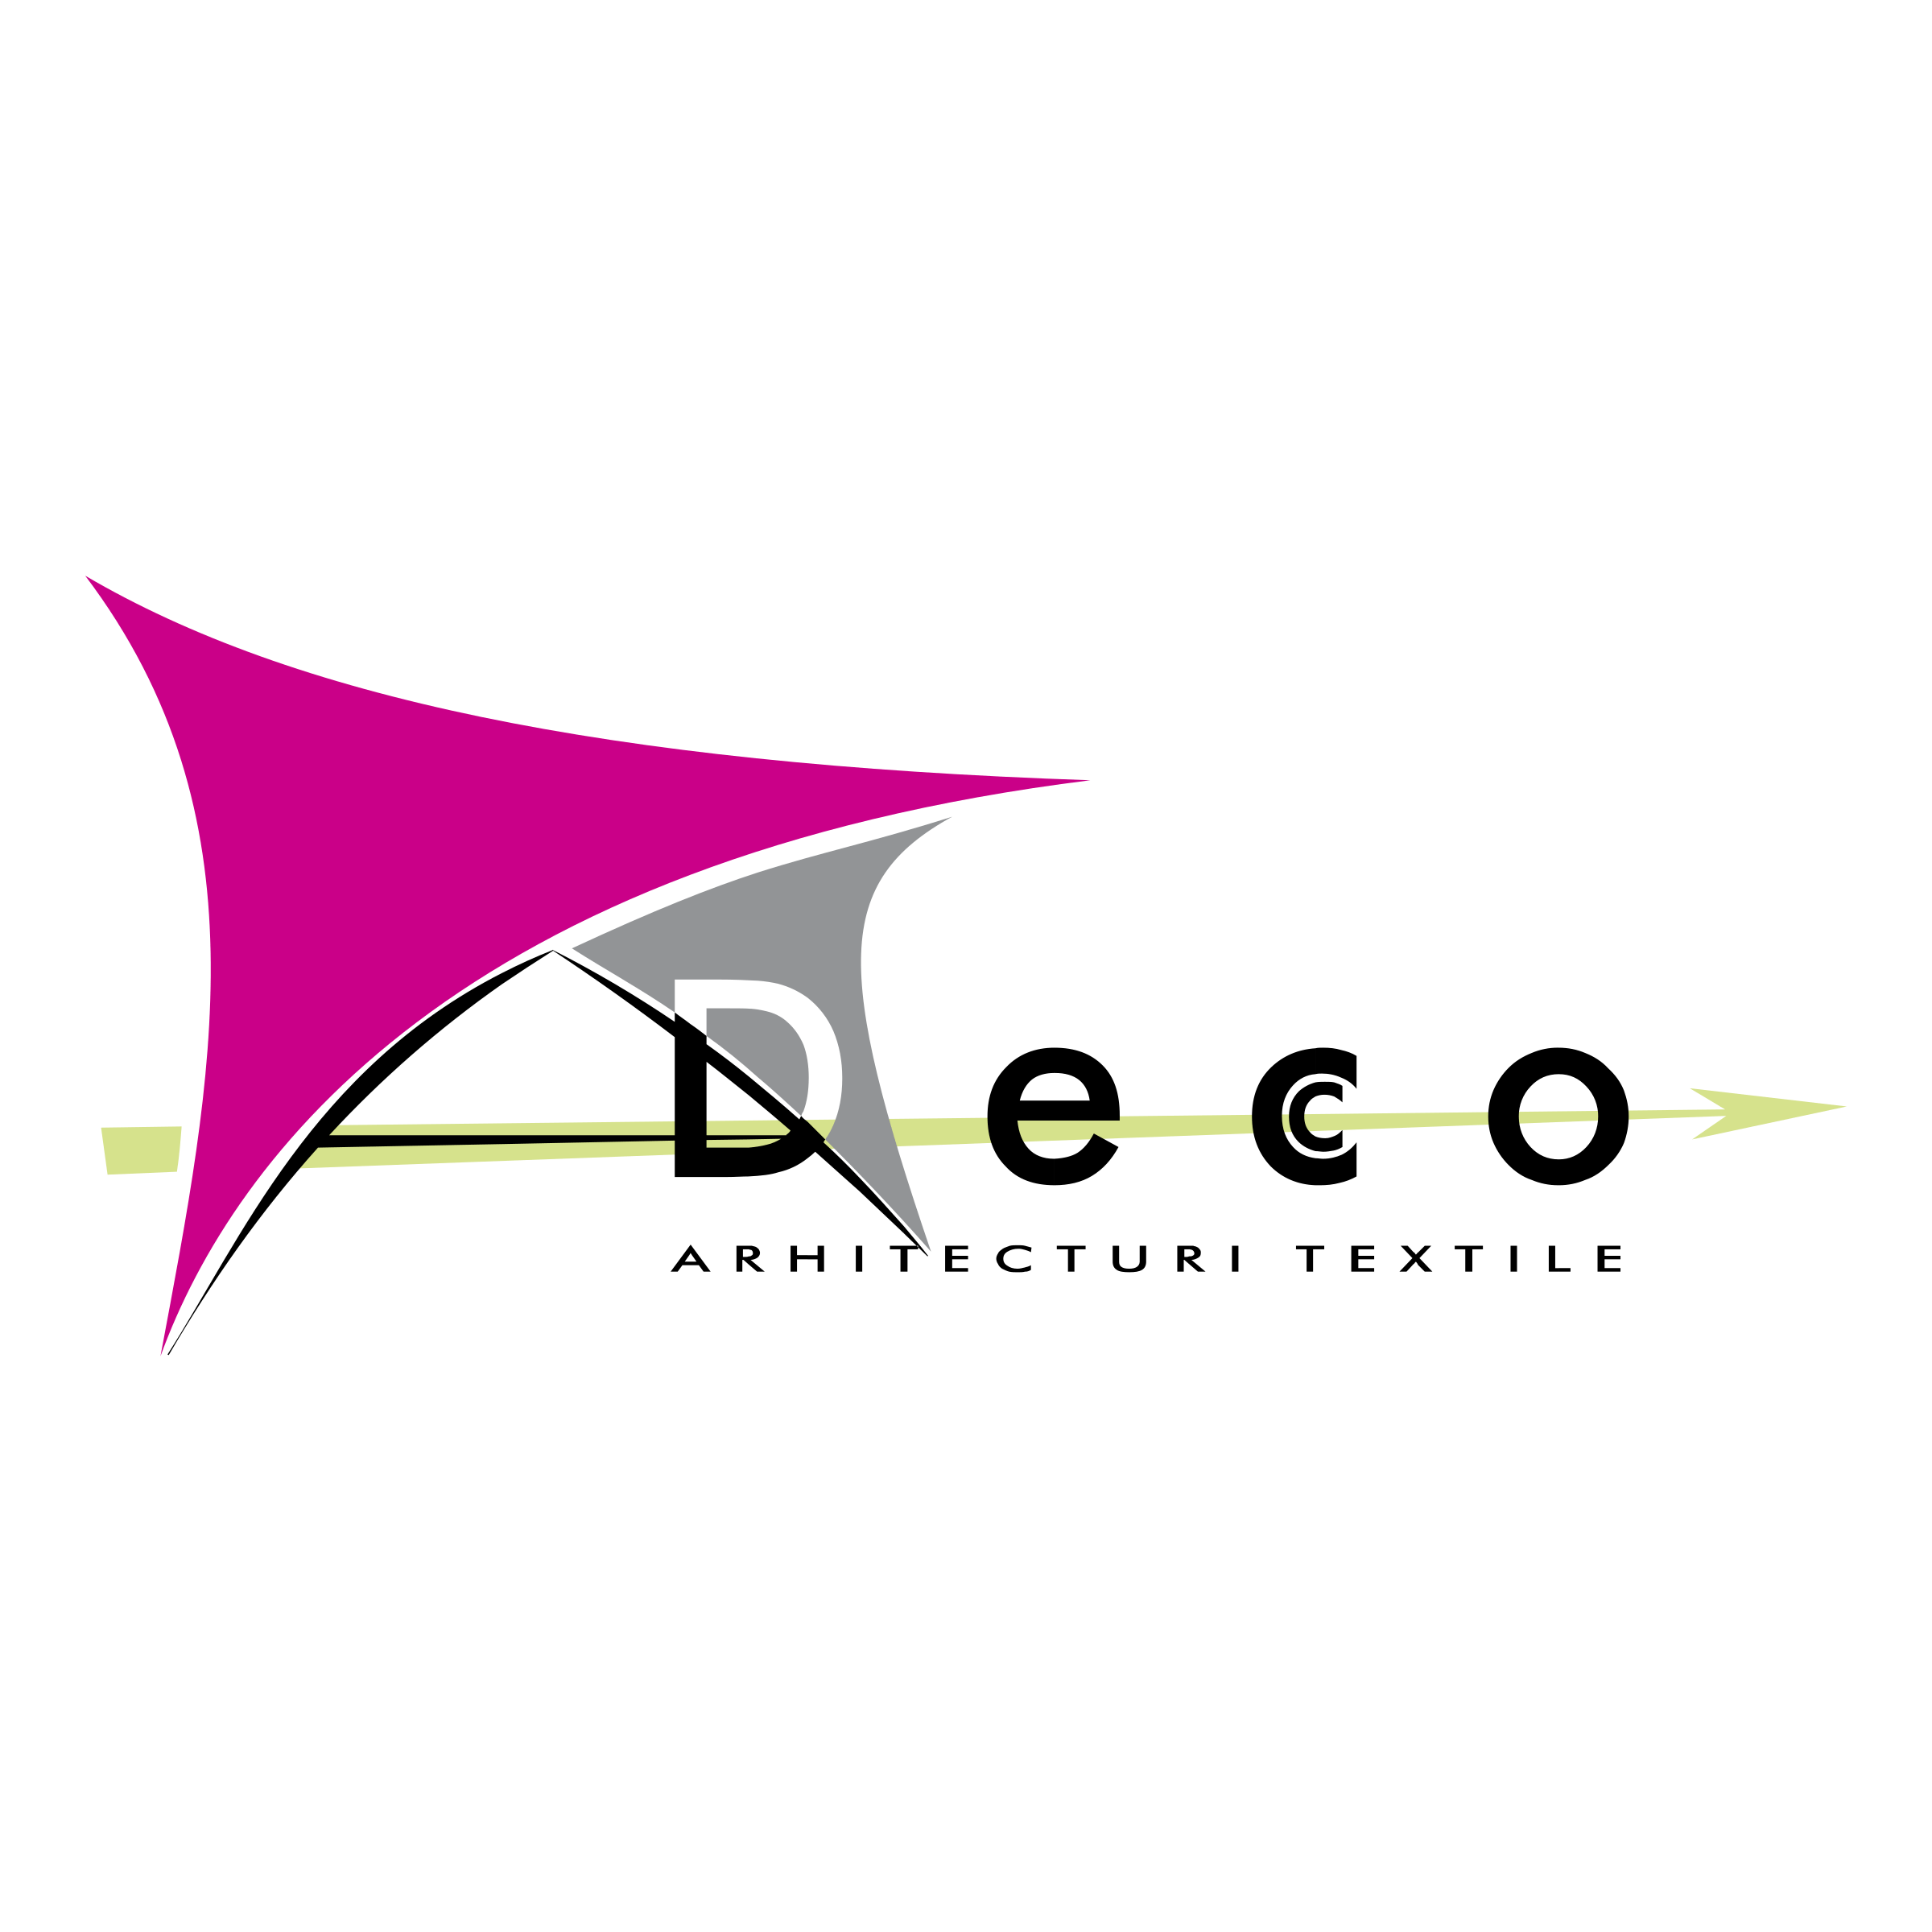 Adecco Logo - Adecco 01 Logo PNG Transparent & SVG Vector - Freebie Supply